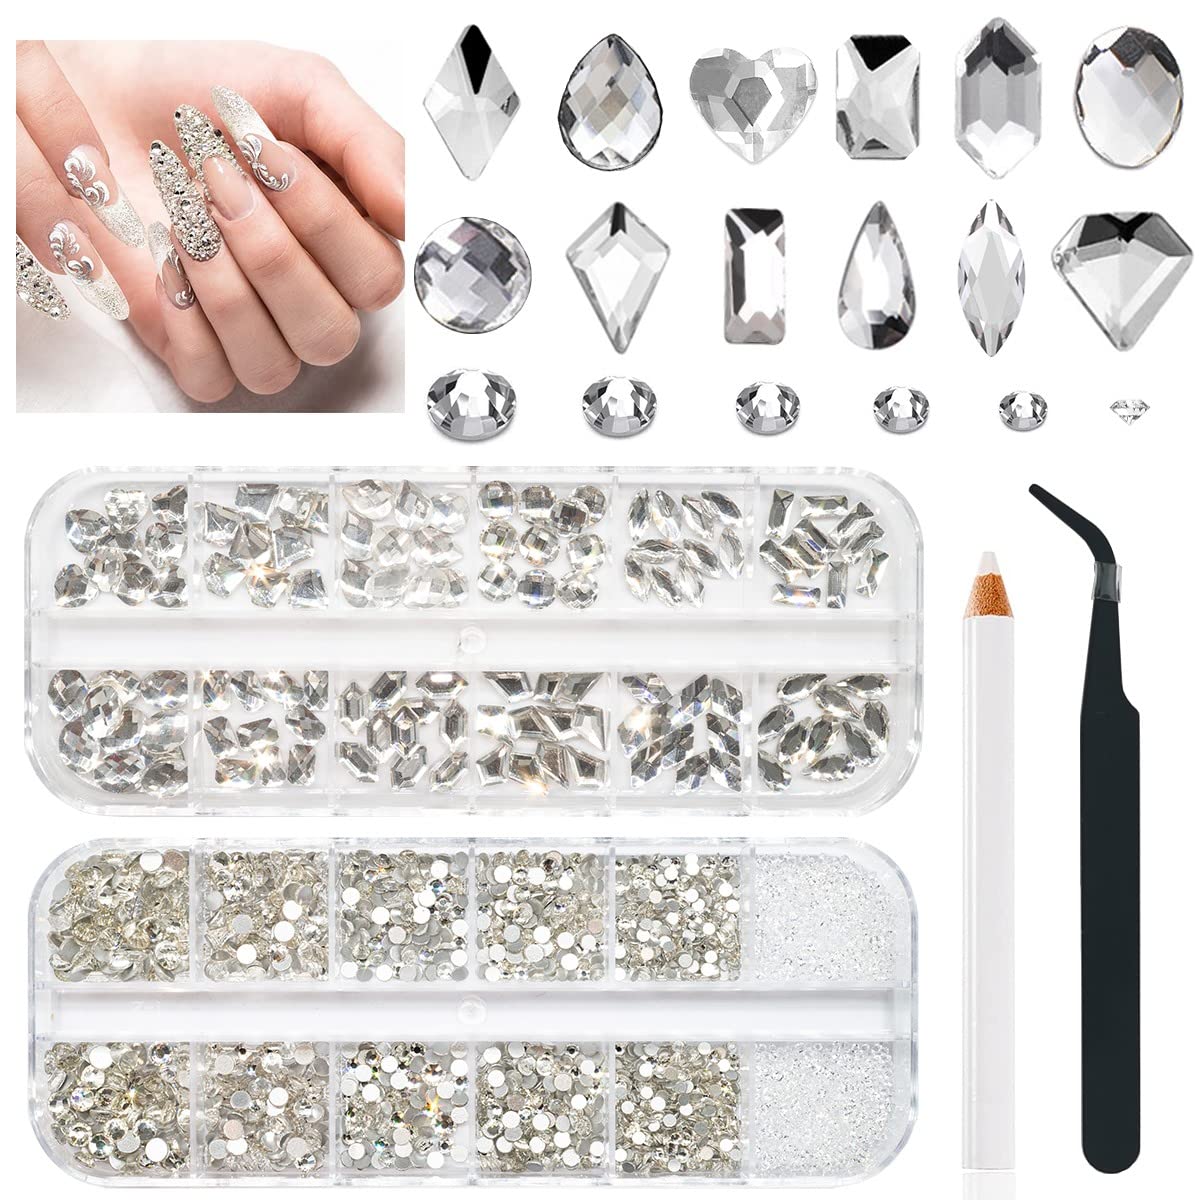 Flat back Rhinestones Round Diamond Crystals Gem Stones Rhinestones For  Crafts Nail Design Decoration - style 7 